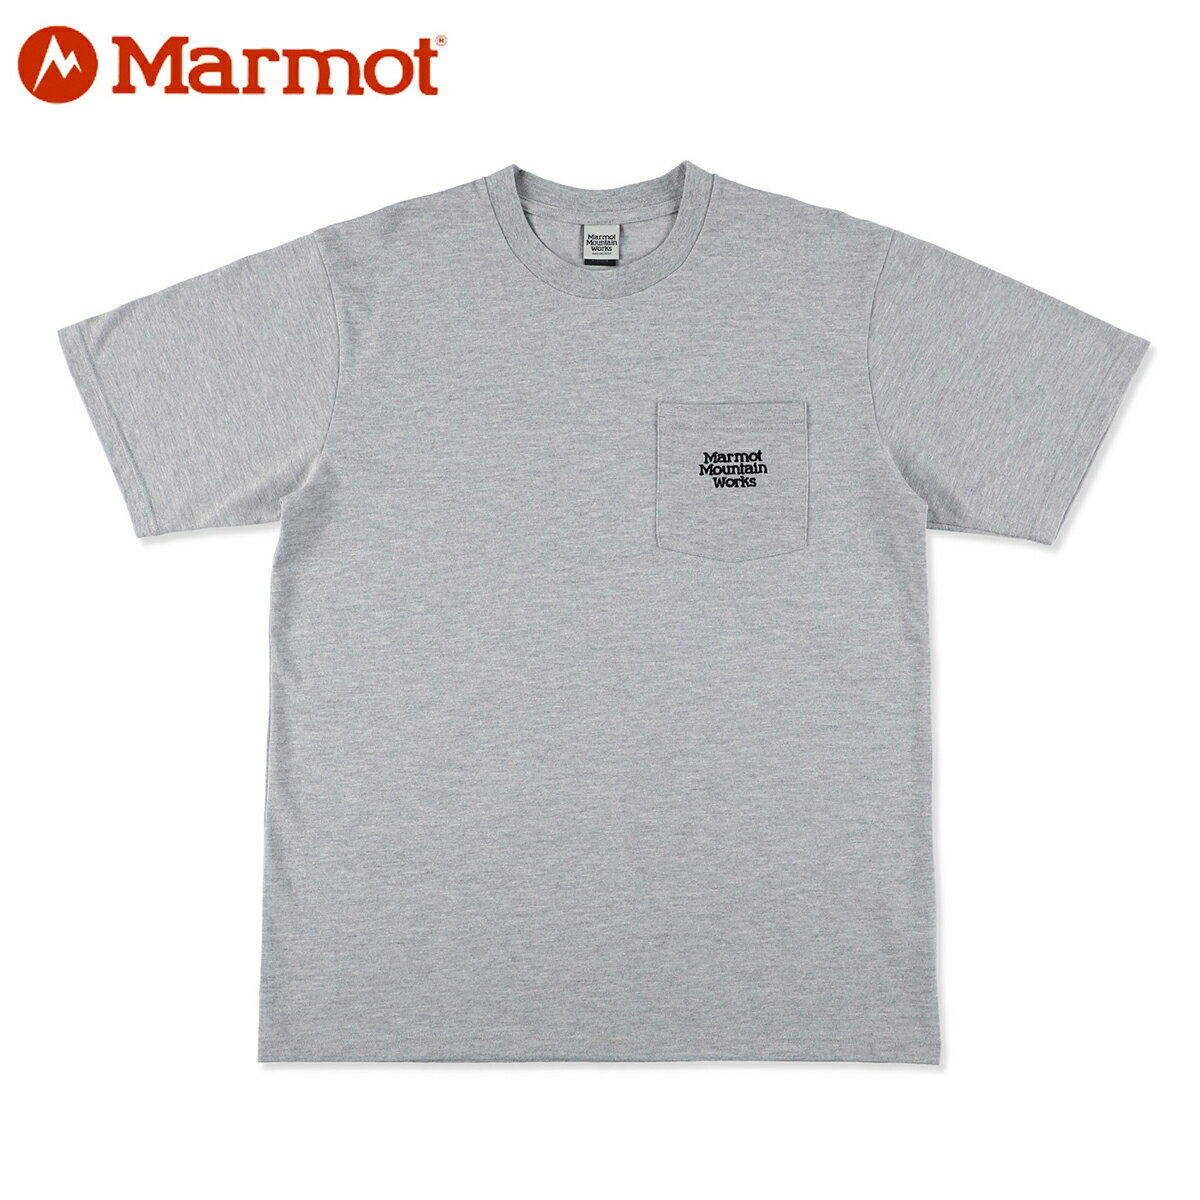 Marmot MMW POCKET-T マーモット MMW ポケット Tシャツ メンズ レディース 半袖Tシャツ QGY グレー TSSMC402-QGY【追跡可能メール便・日時指定不可】 1